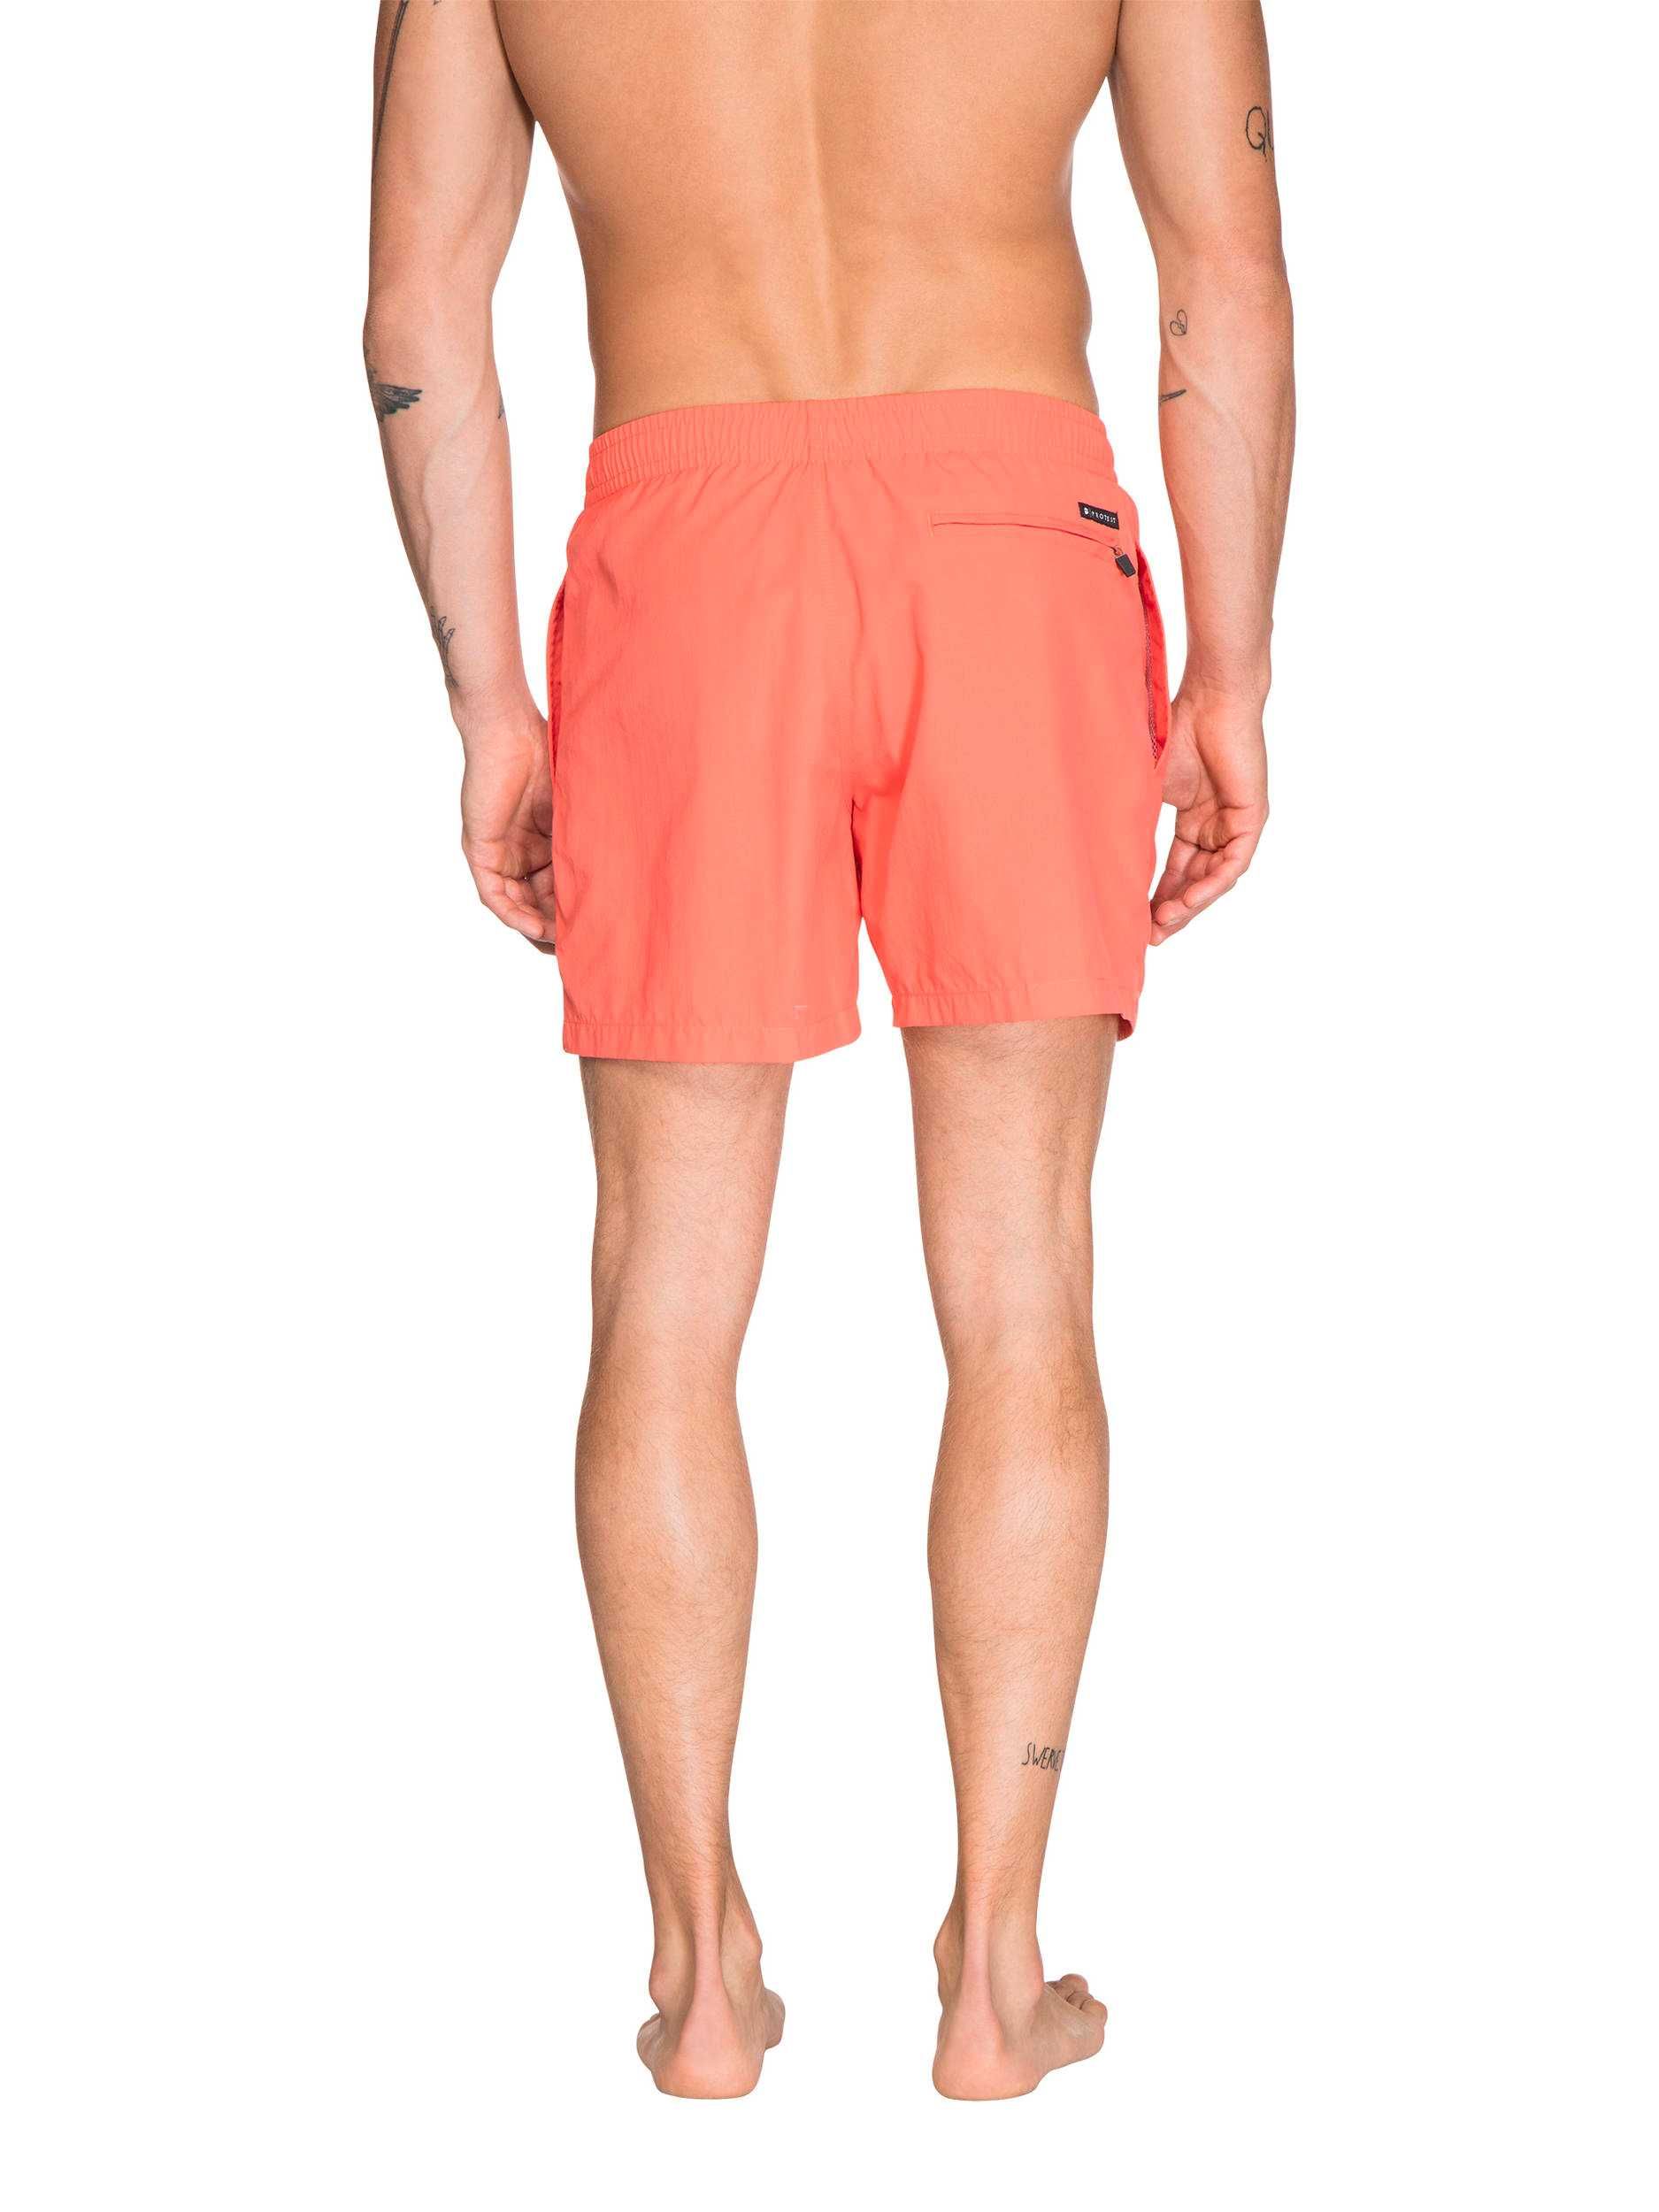 Нови шорти за плуване Protest, панталонки, бански, размер M, L, XL